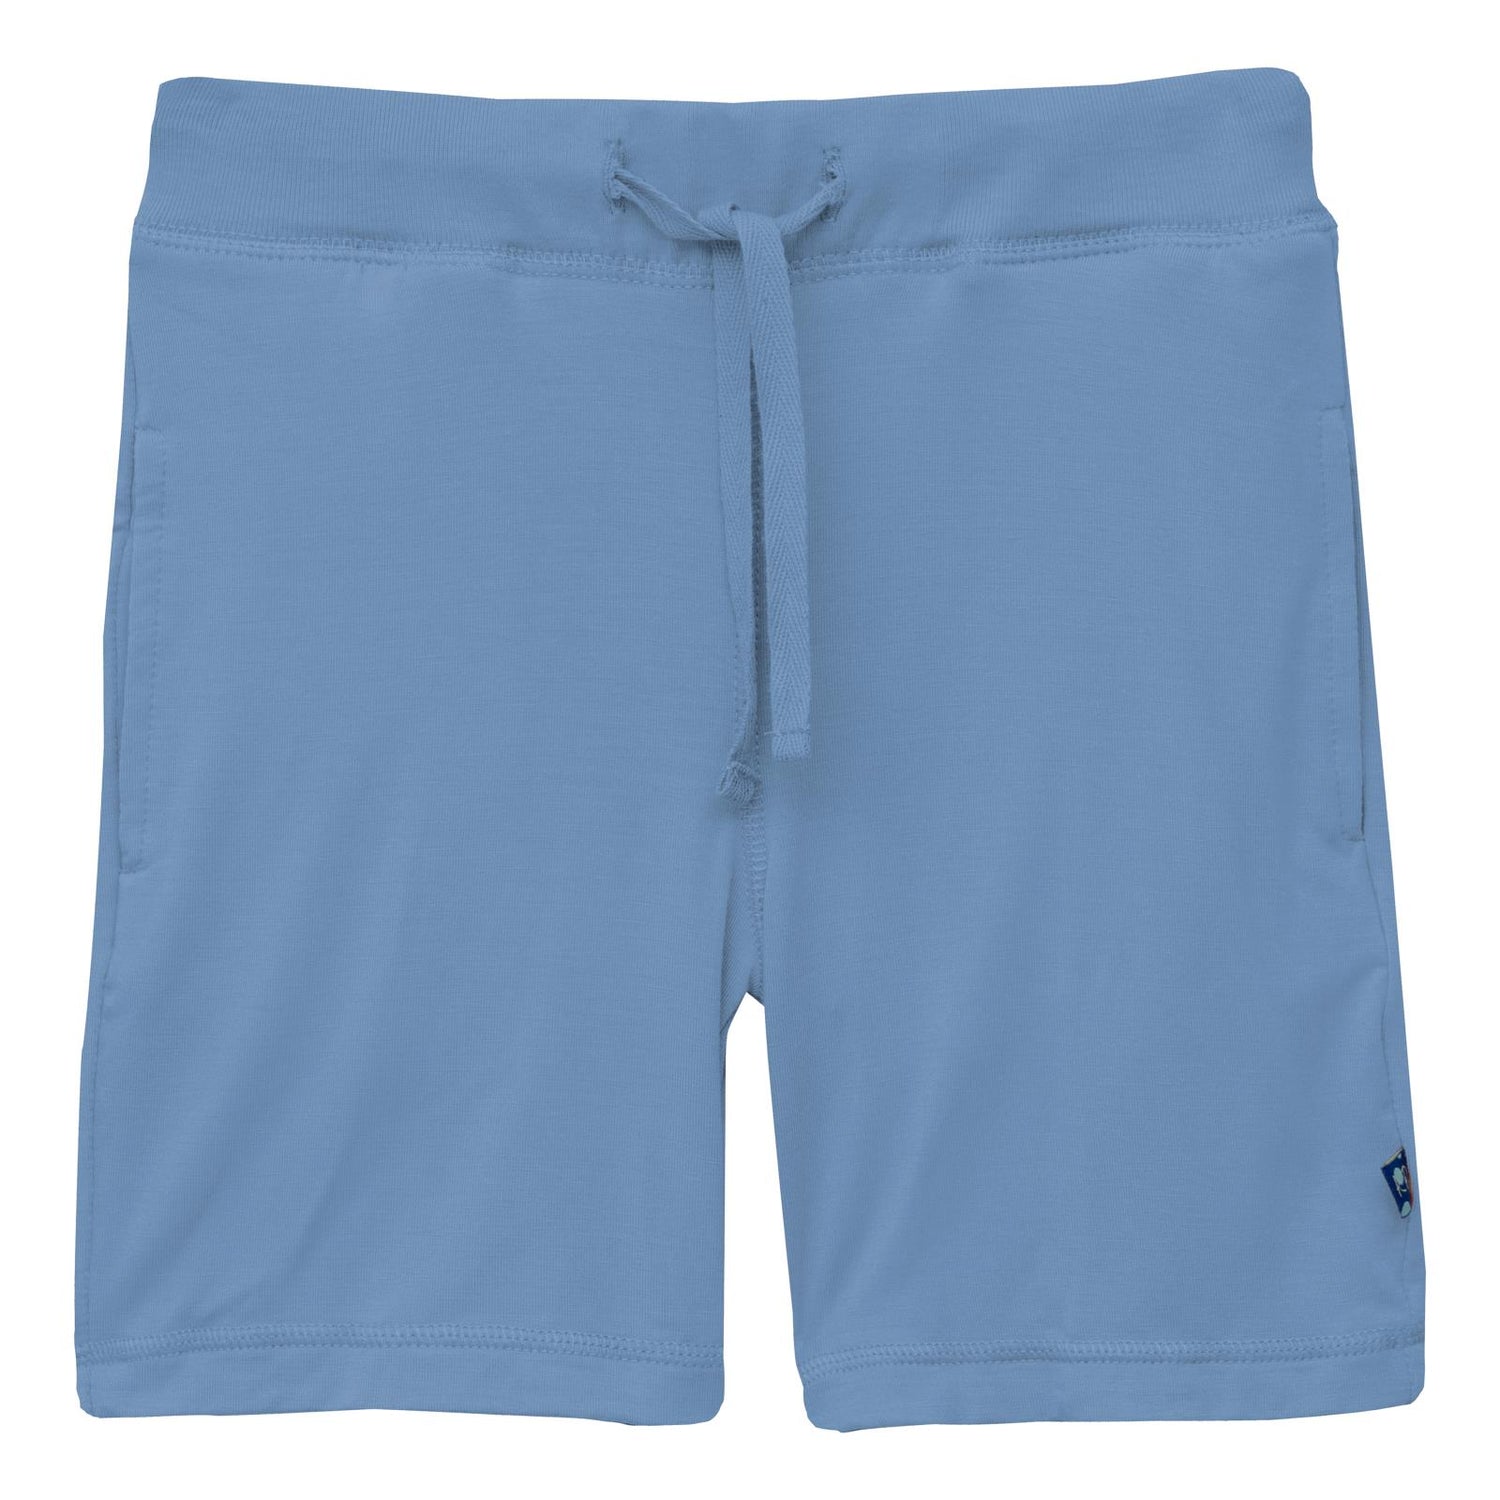 Lightweight Drawstring Shorts in Dream Blue